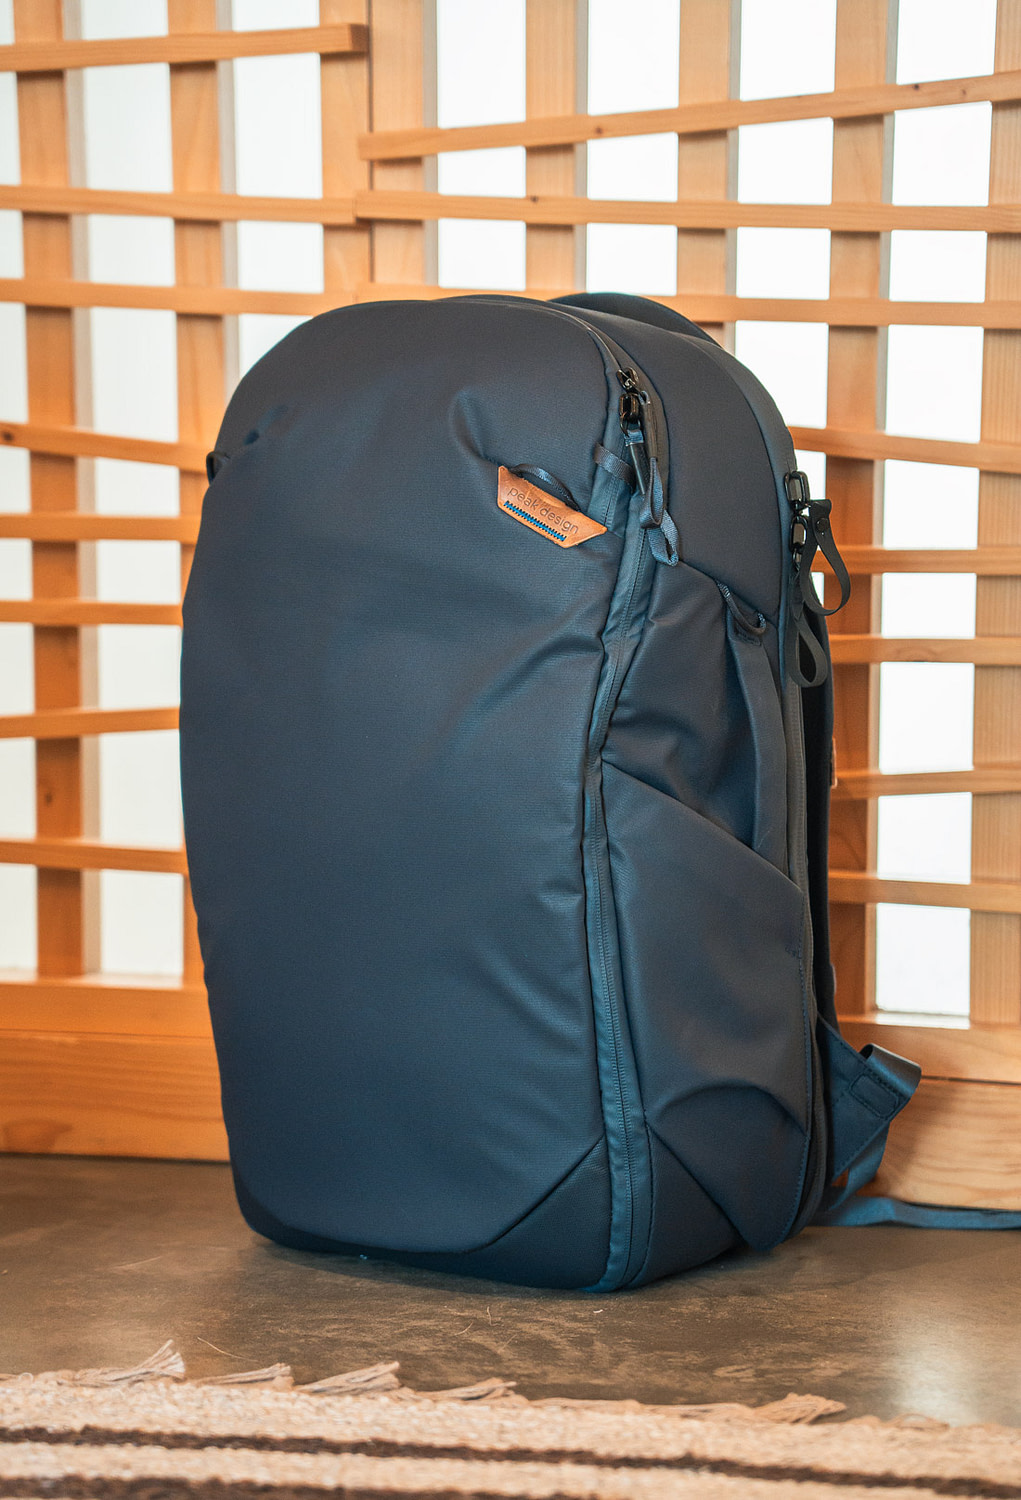 Lightweight travel backpack